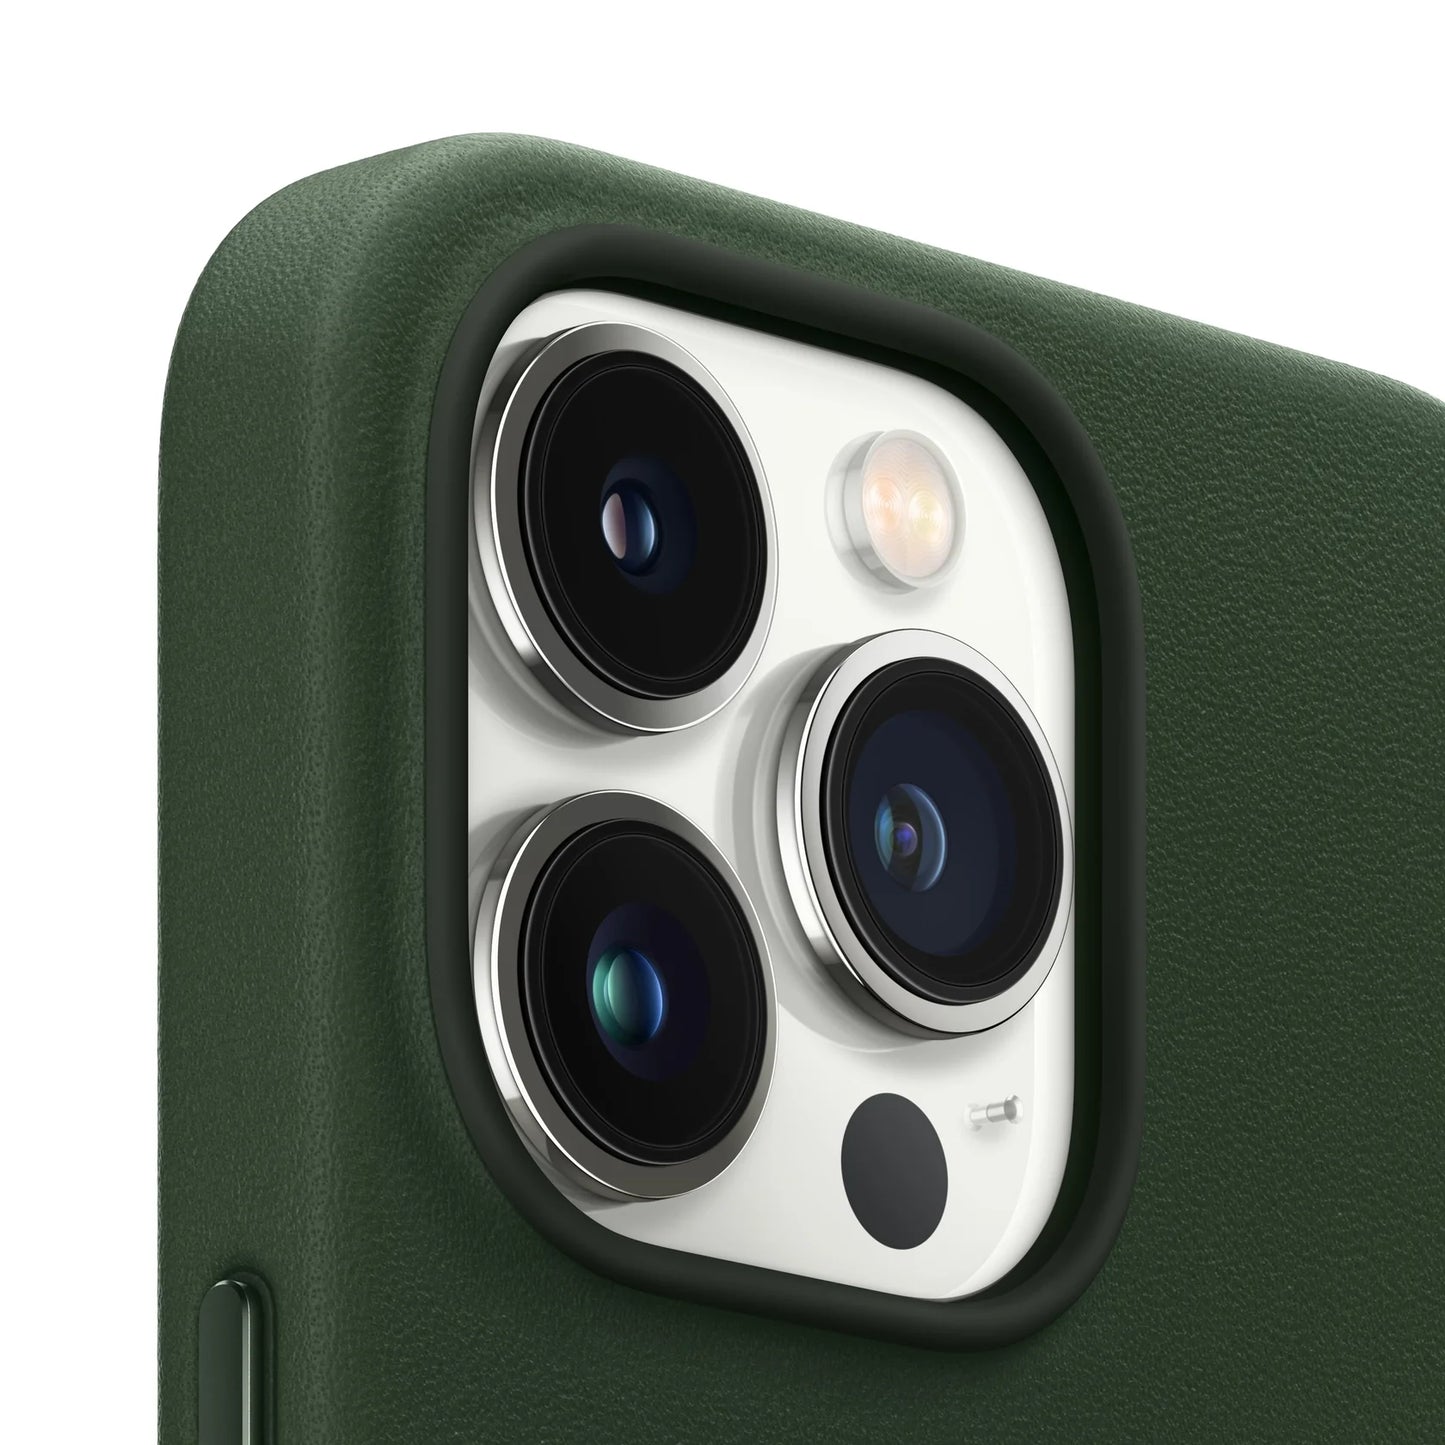 Capa de Couro - Verde Sequoia - Série iPhone 13